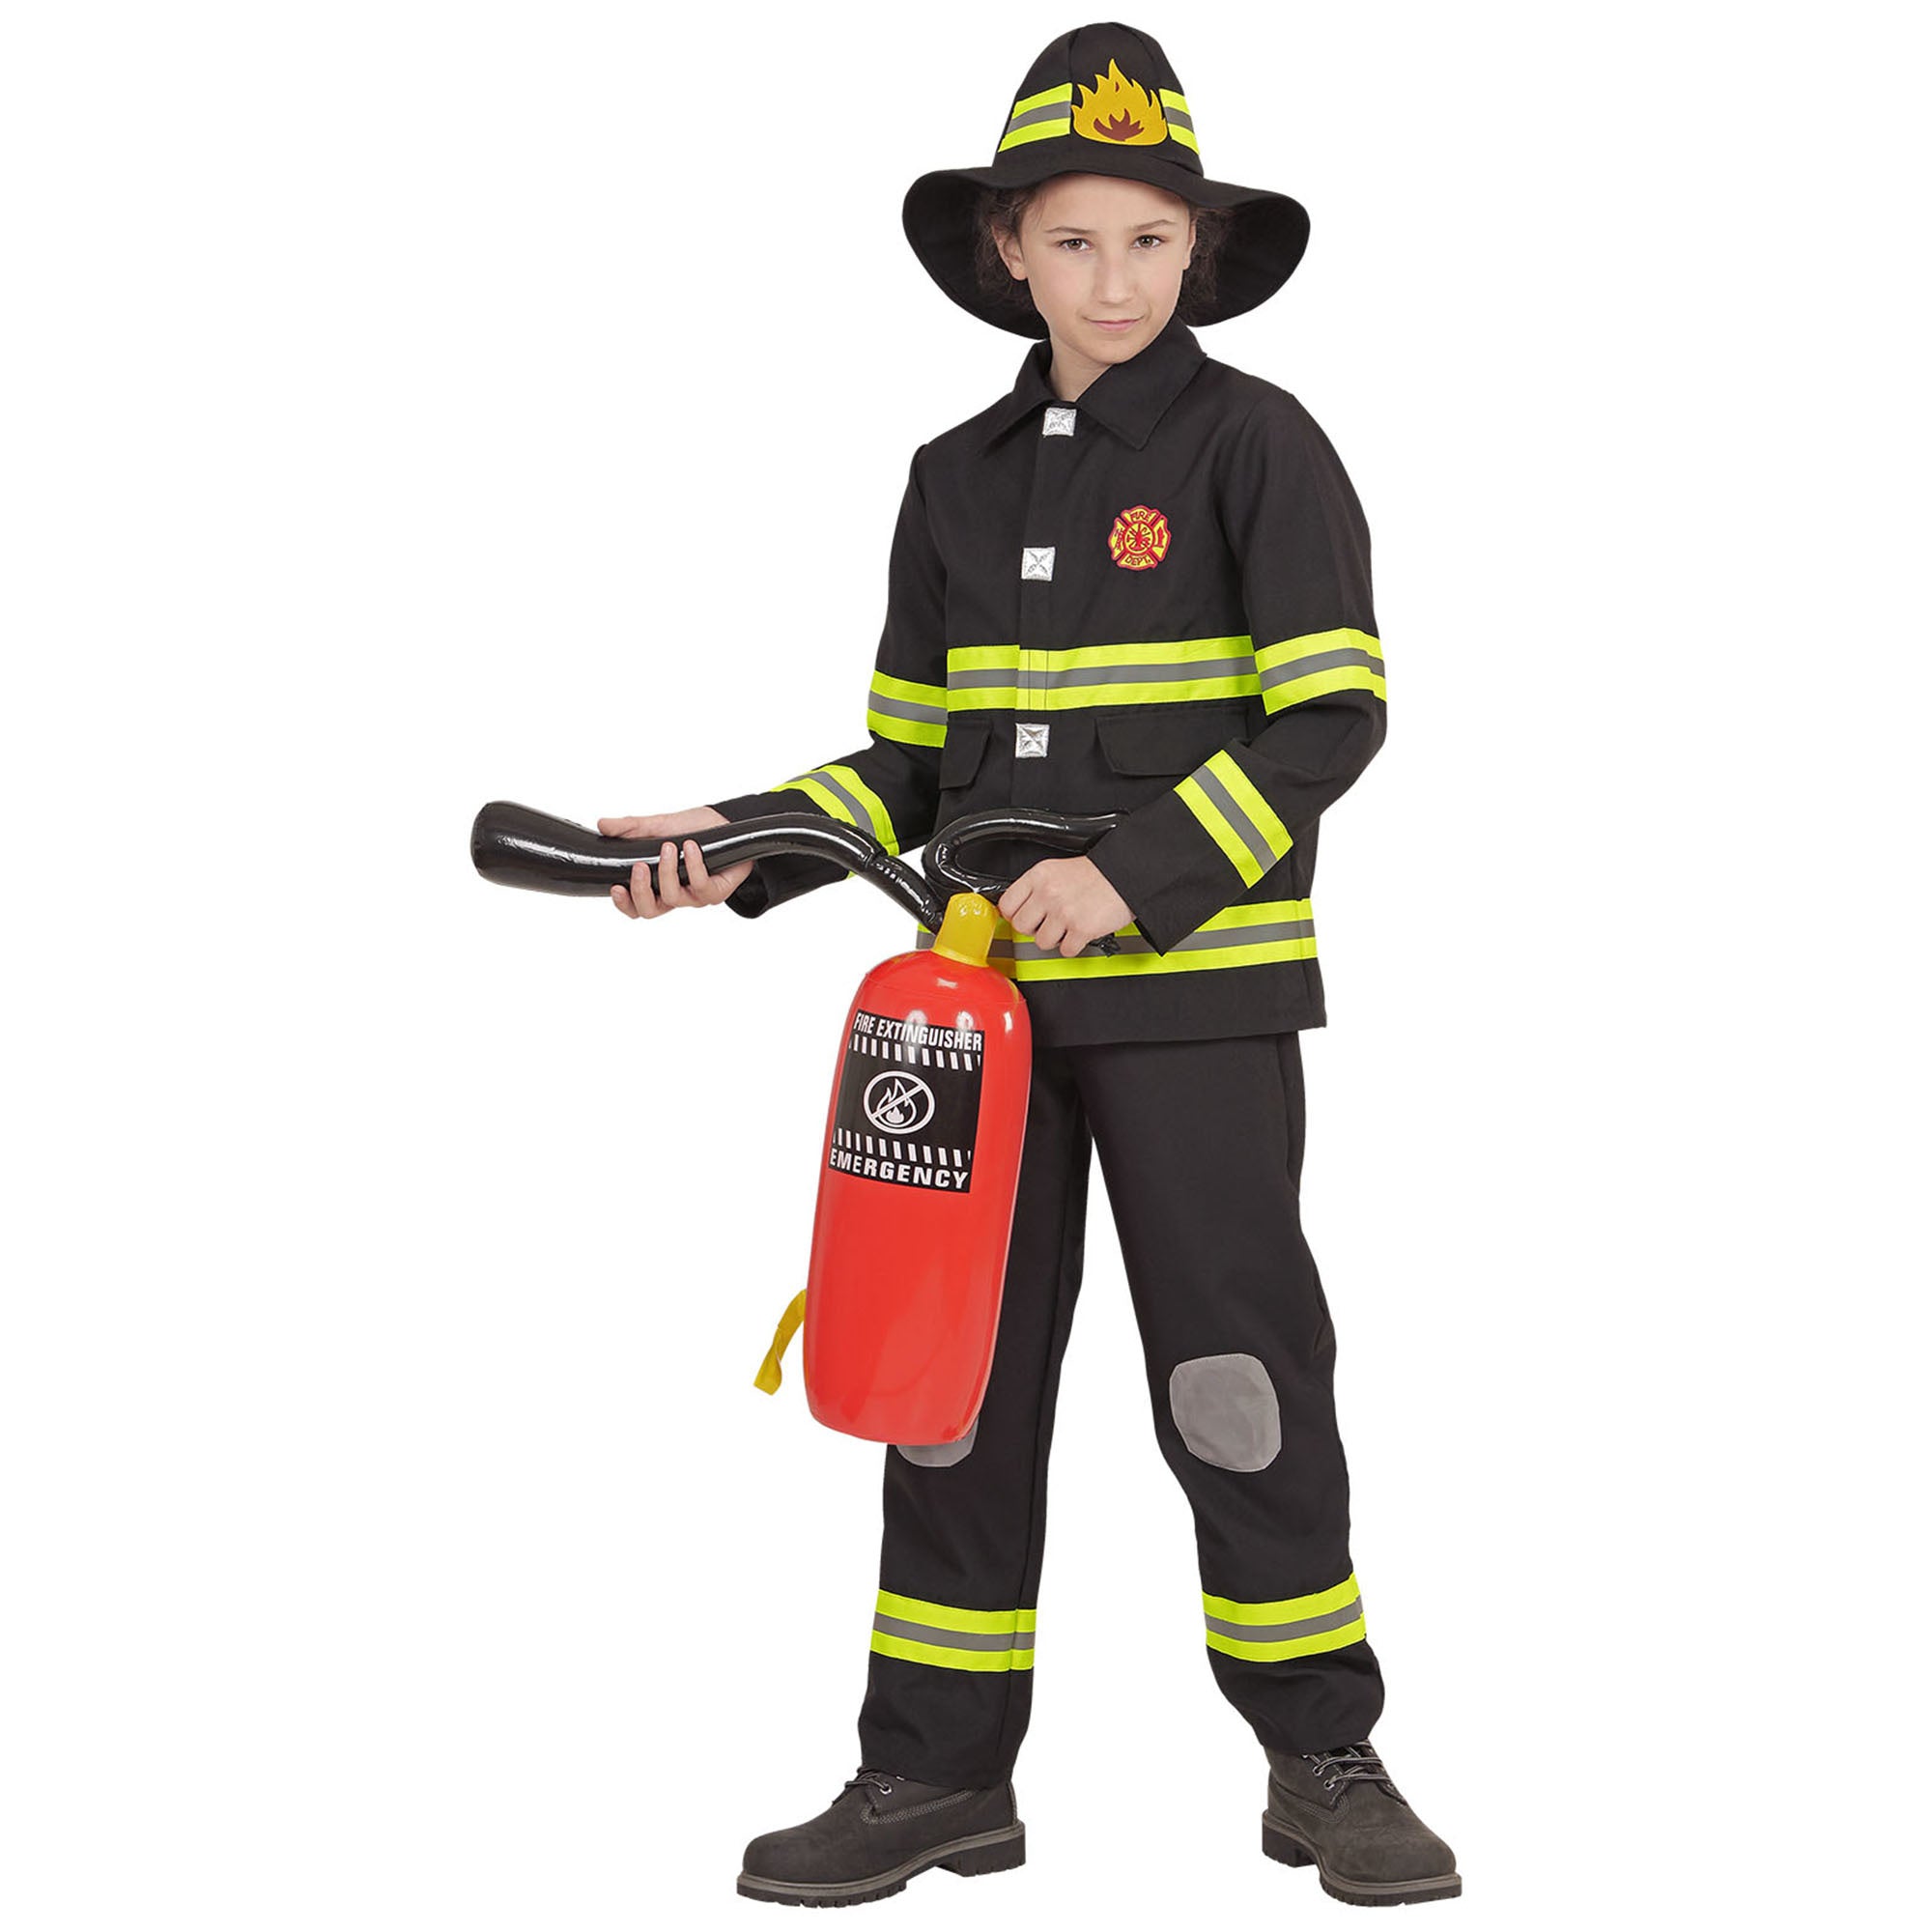 Widmann - Brandweer Kostuum - Nypd Brandweer Zwart - Jongen - Zwart - Maat 116 - Carnavalskleding - Verkleedkleding